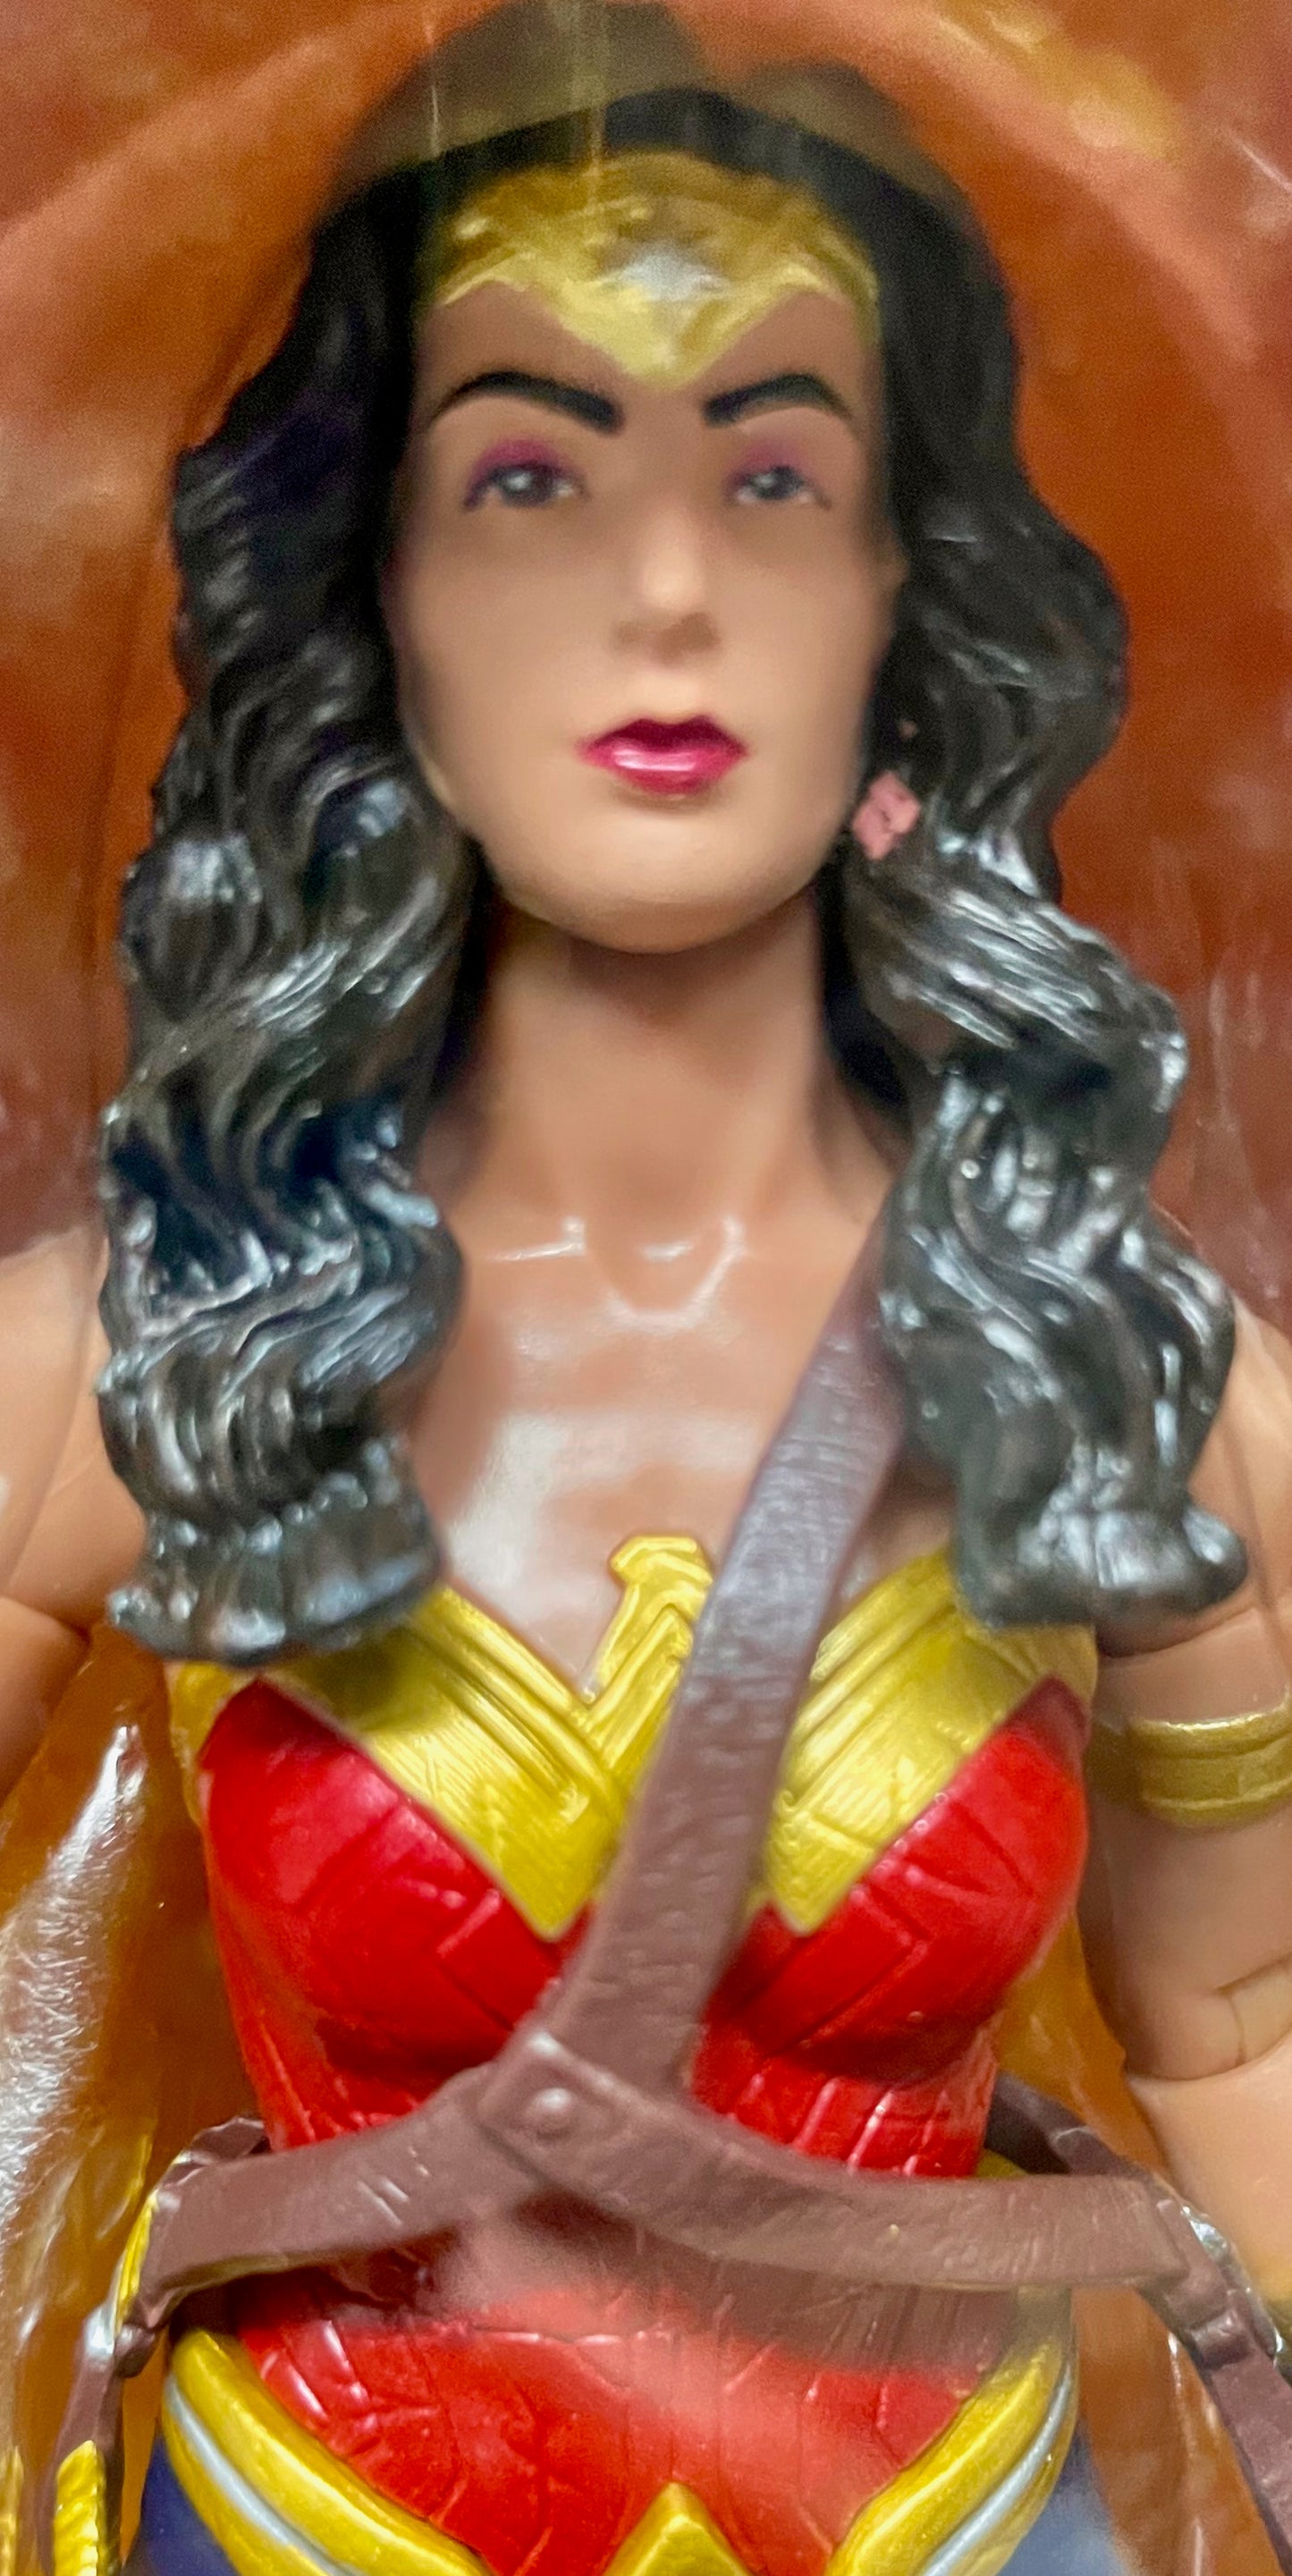 DC Multiverse Wonder Woman